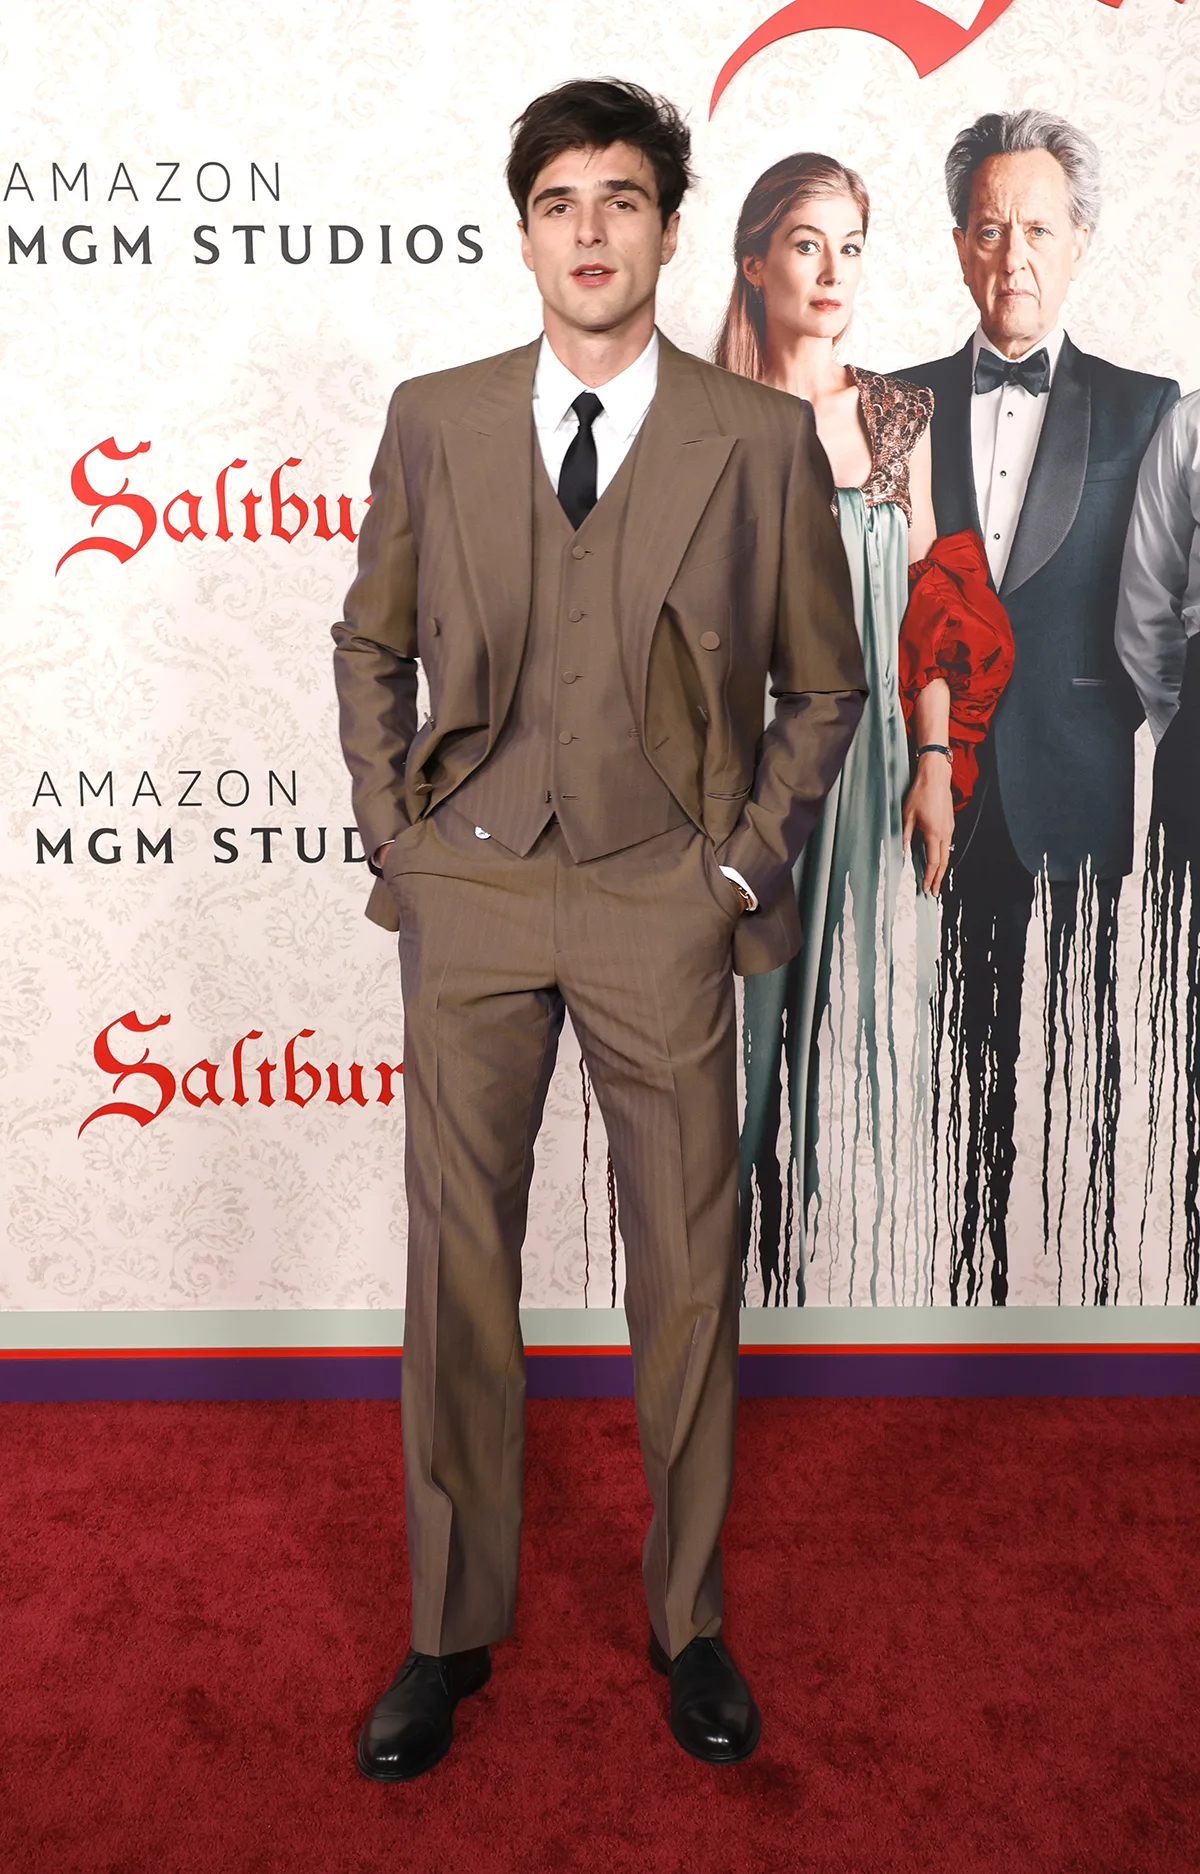 Jacob Elordi define próximo filme após "Saltburn" e "Priscilla"